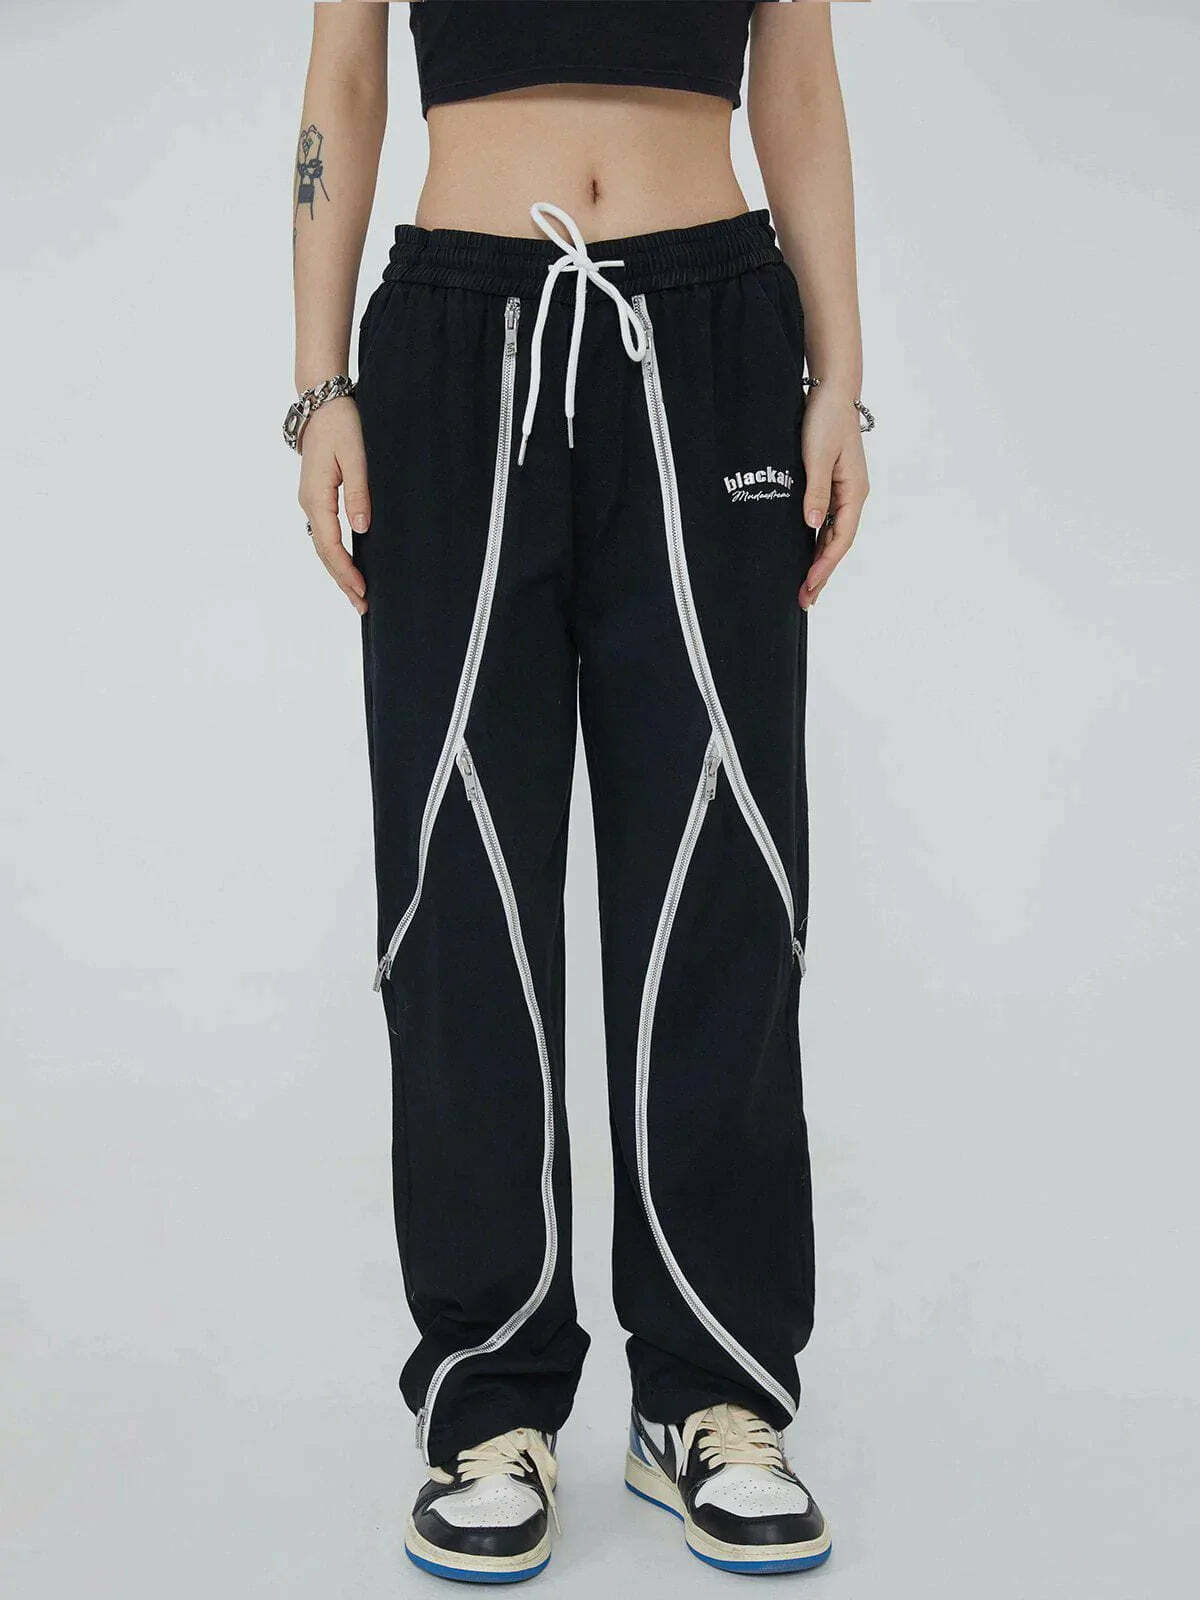 zipperembellished cargo pants edgy streetwear essential 5569